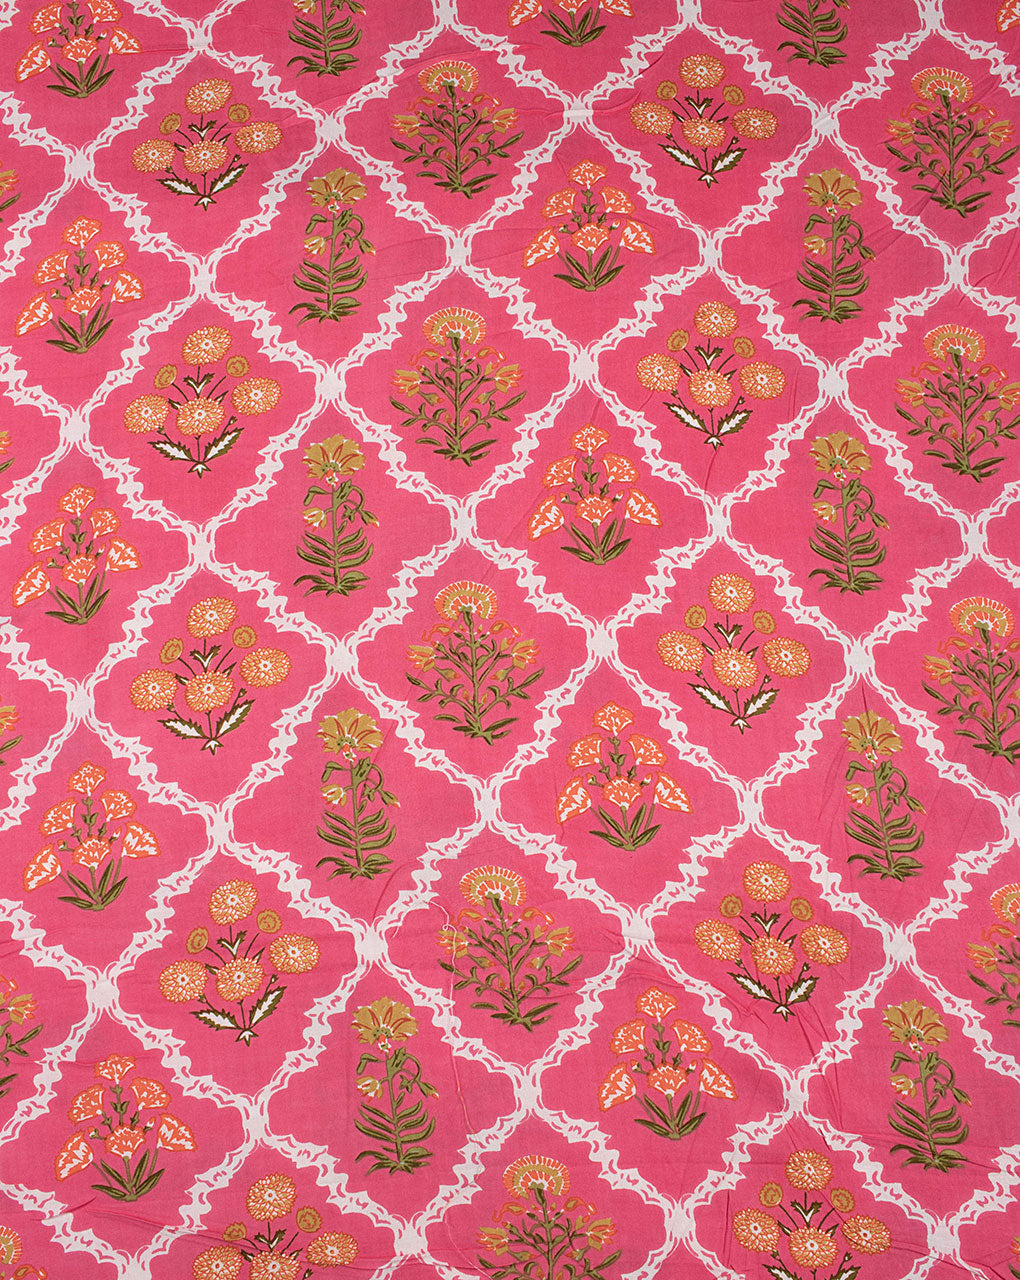 Screen Print Rayon Fabric - Fabriclore.com